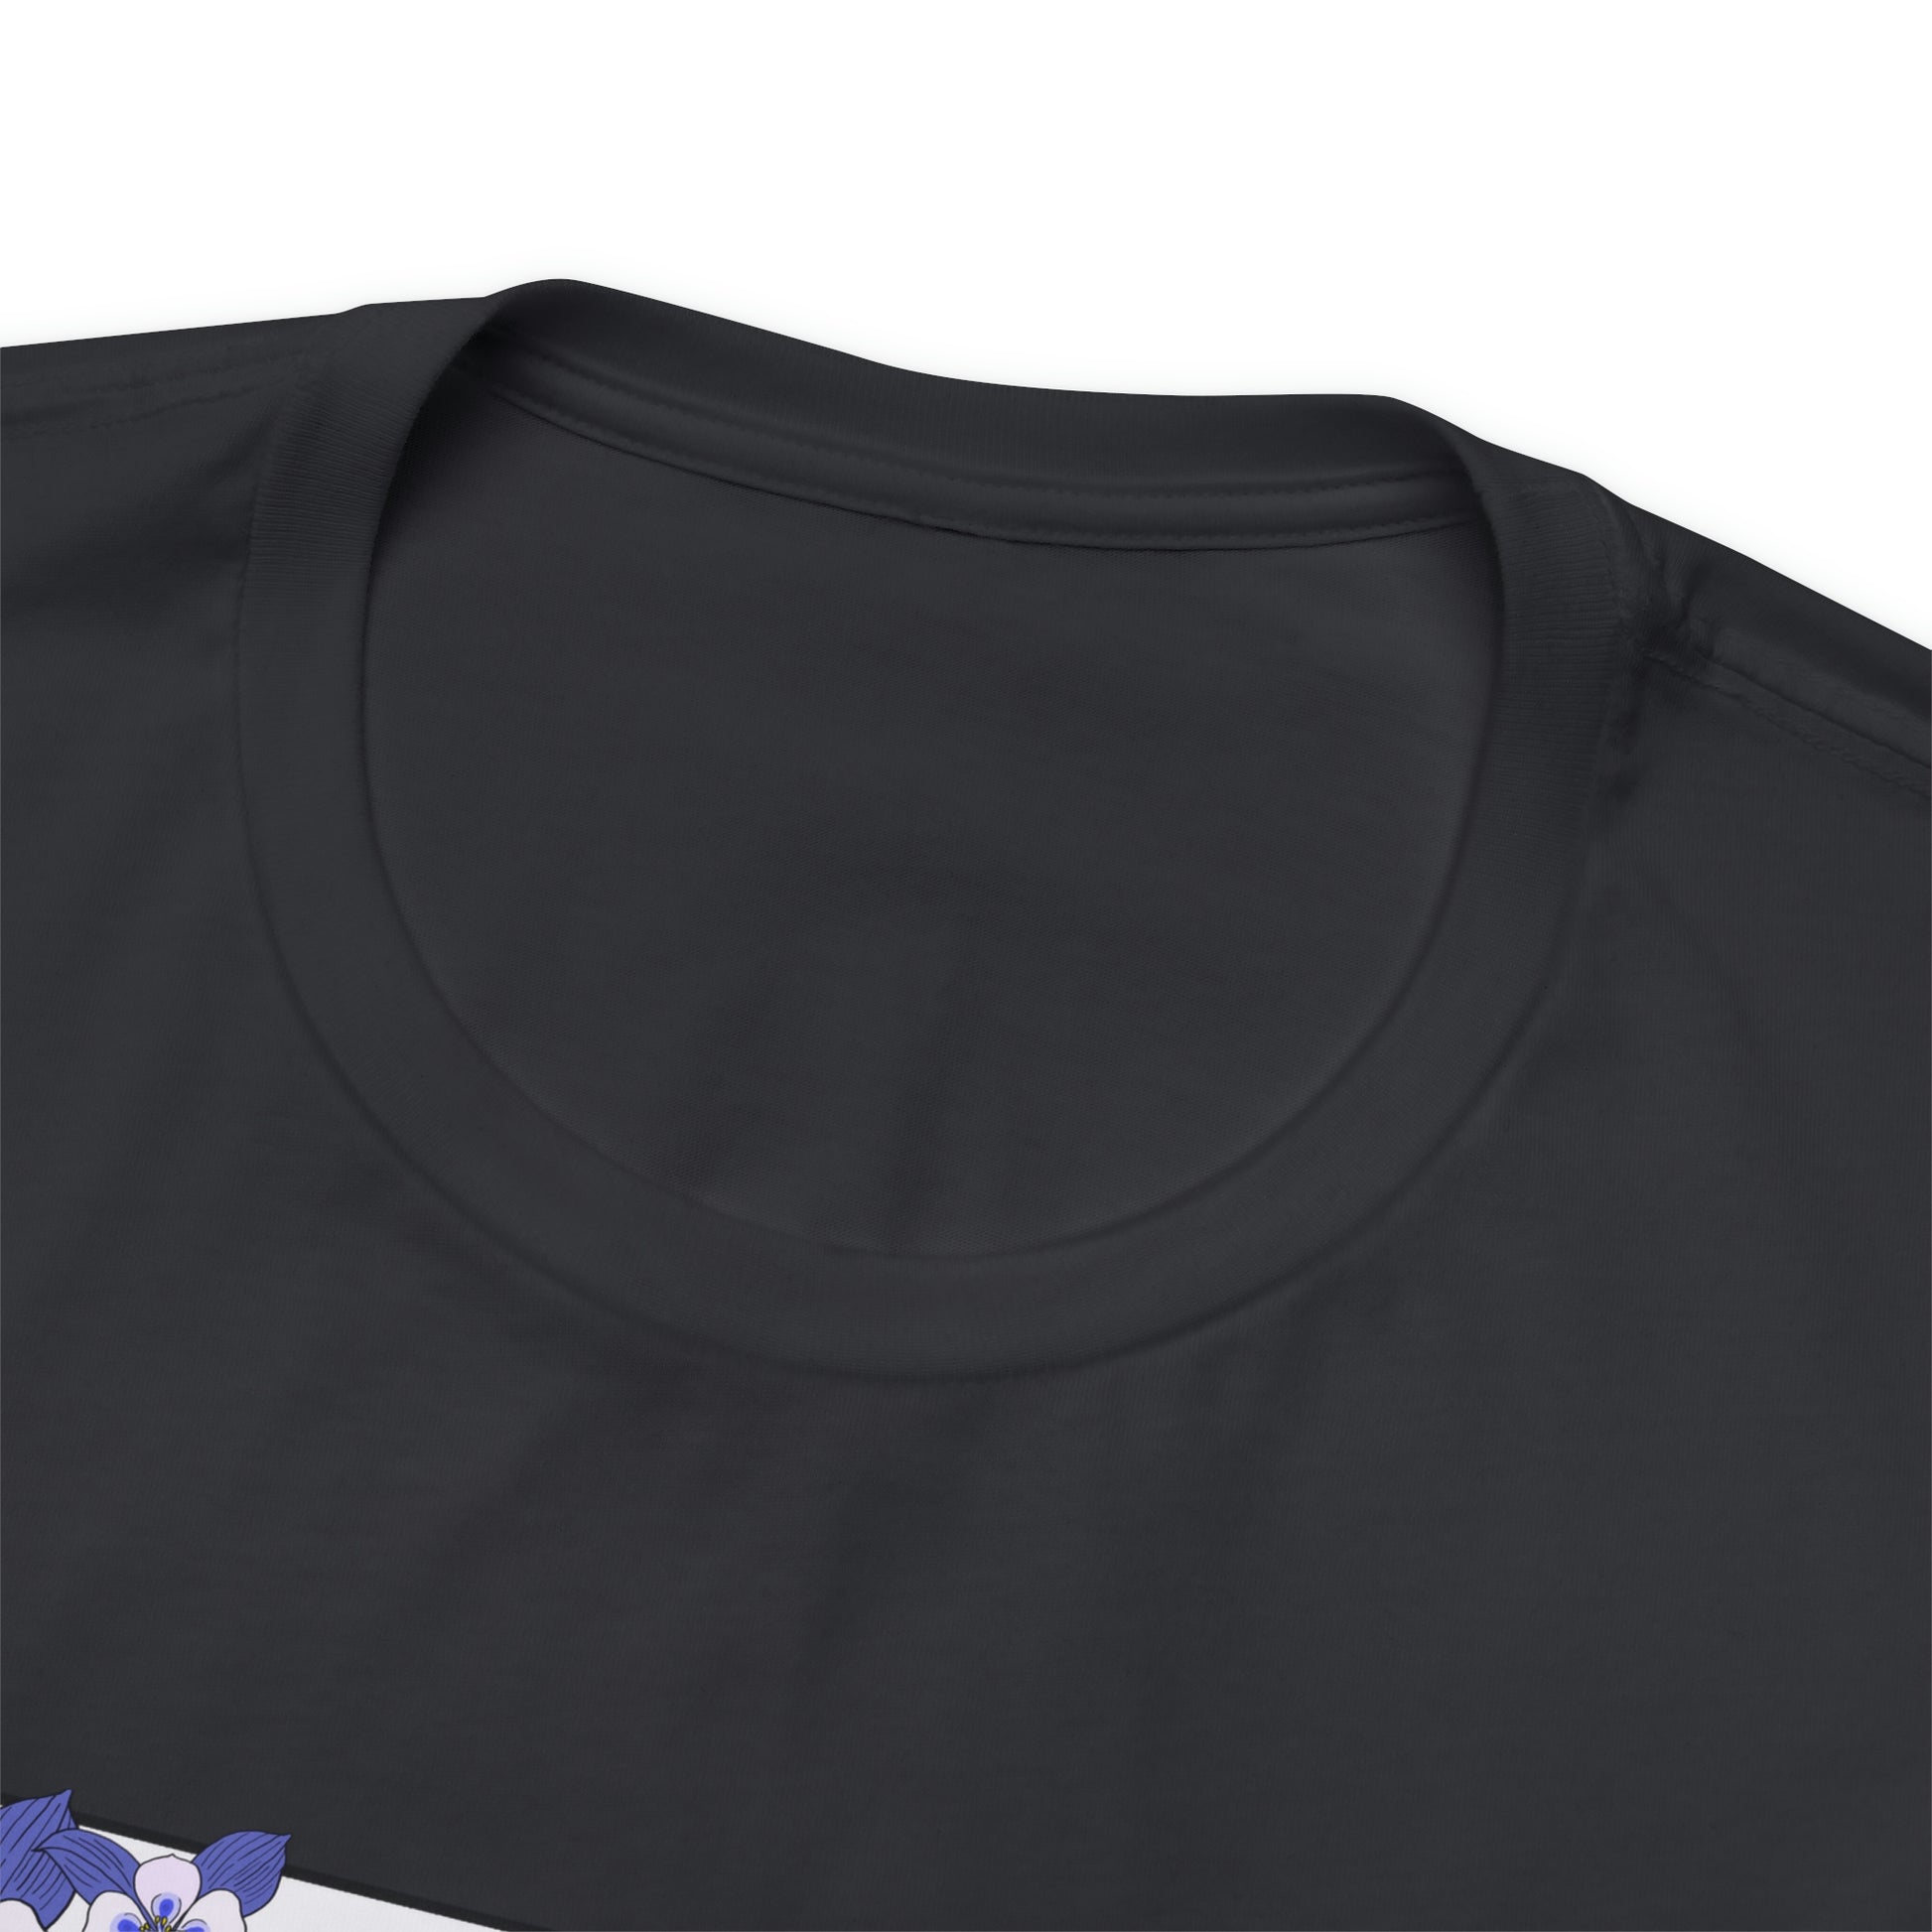 Colorado State Flower Short Sleeve T-shirt